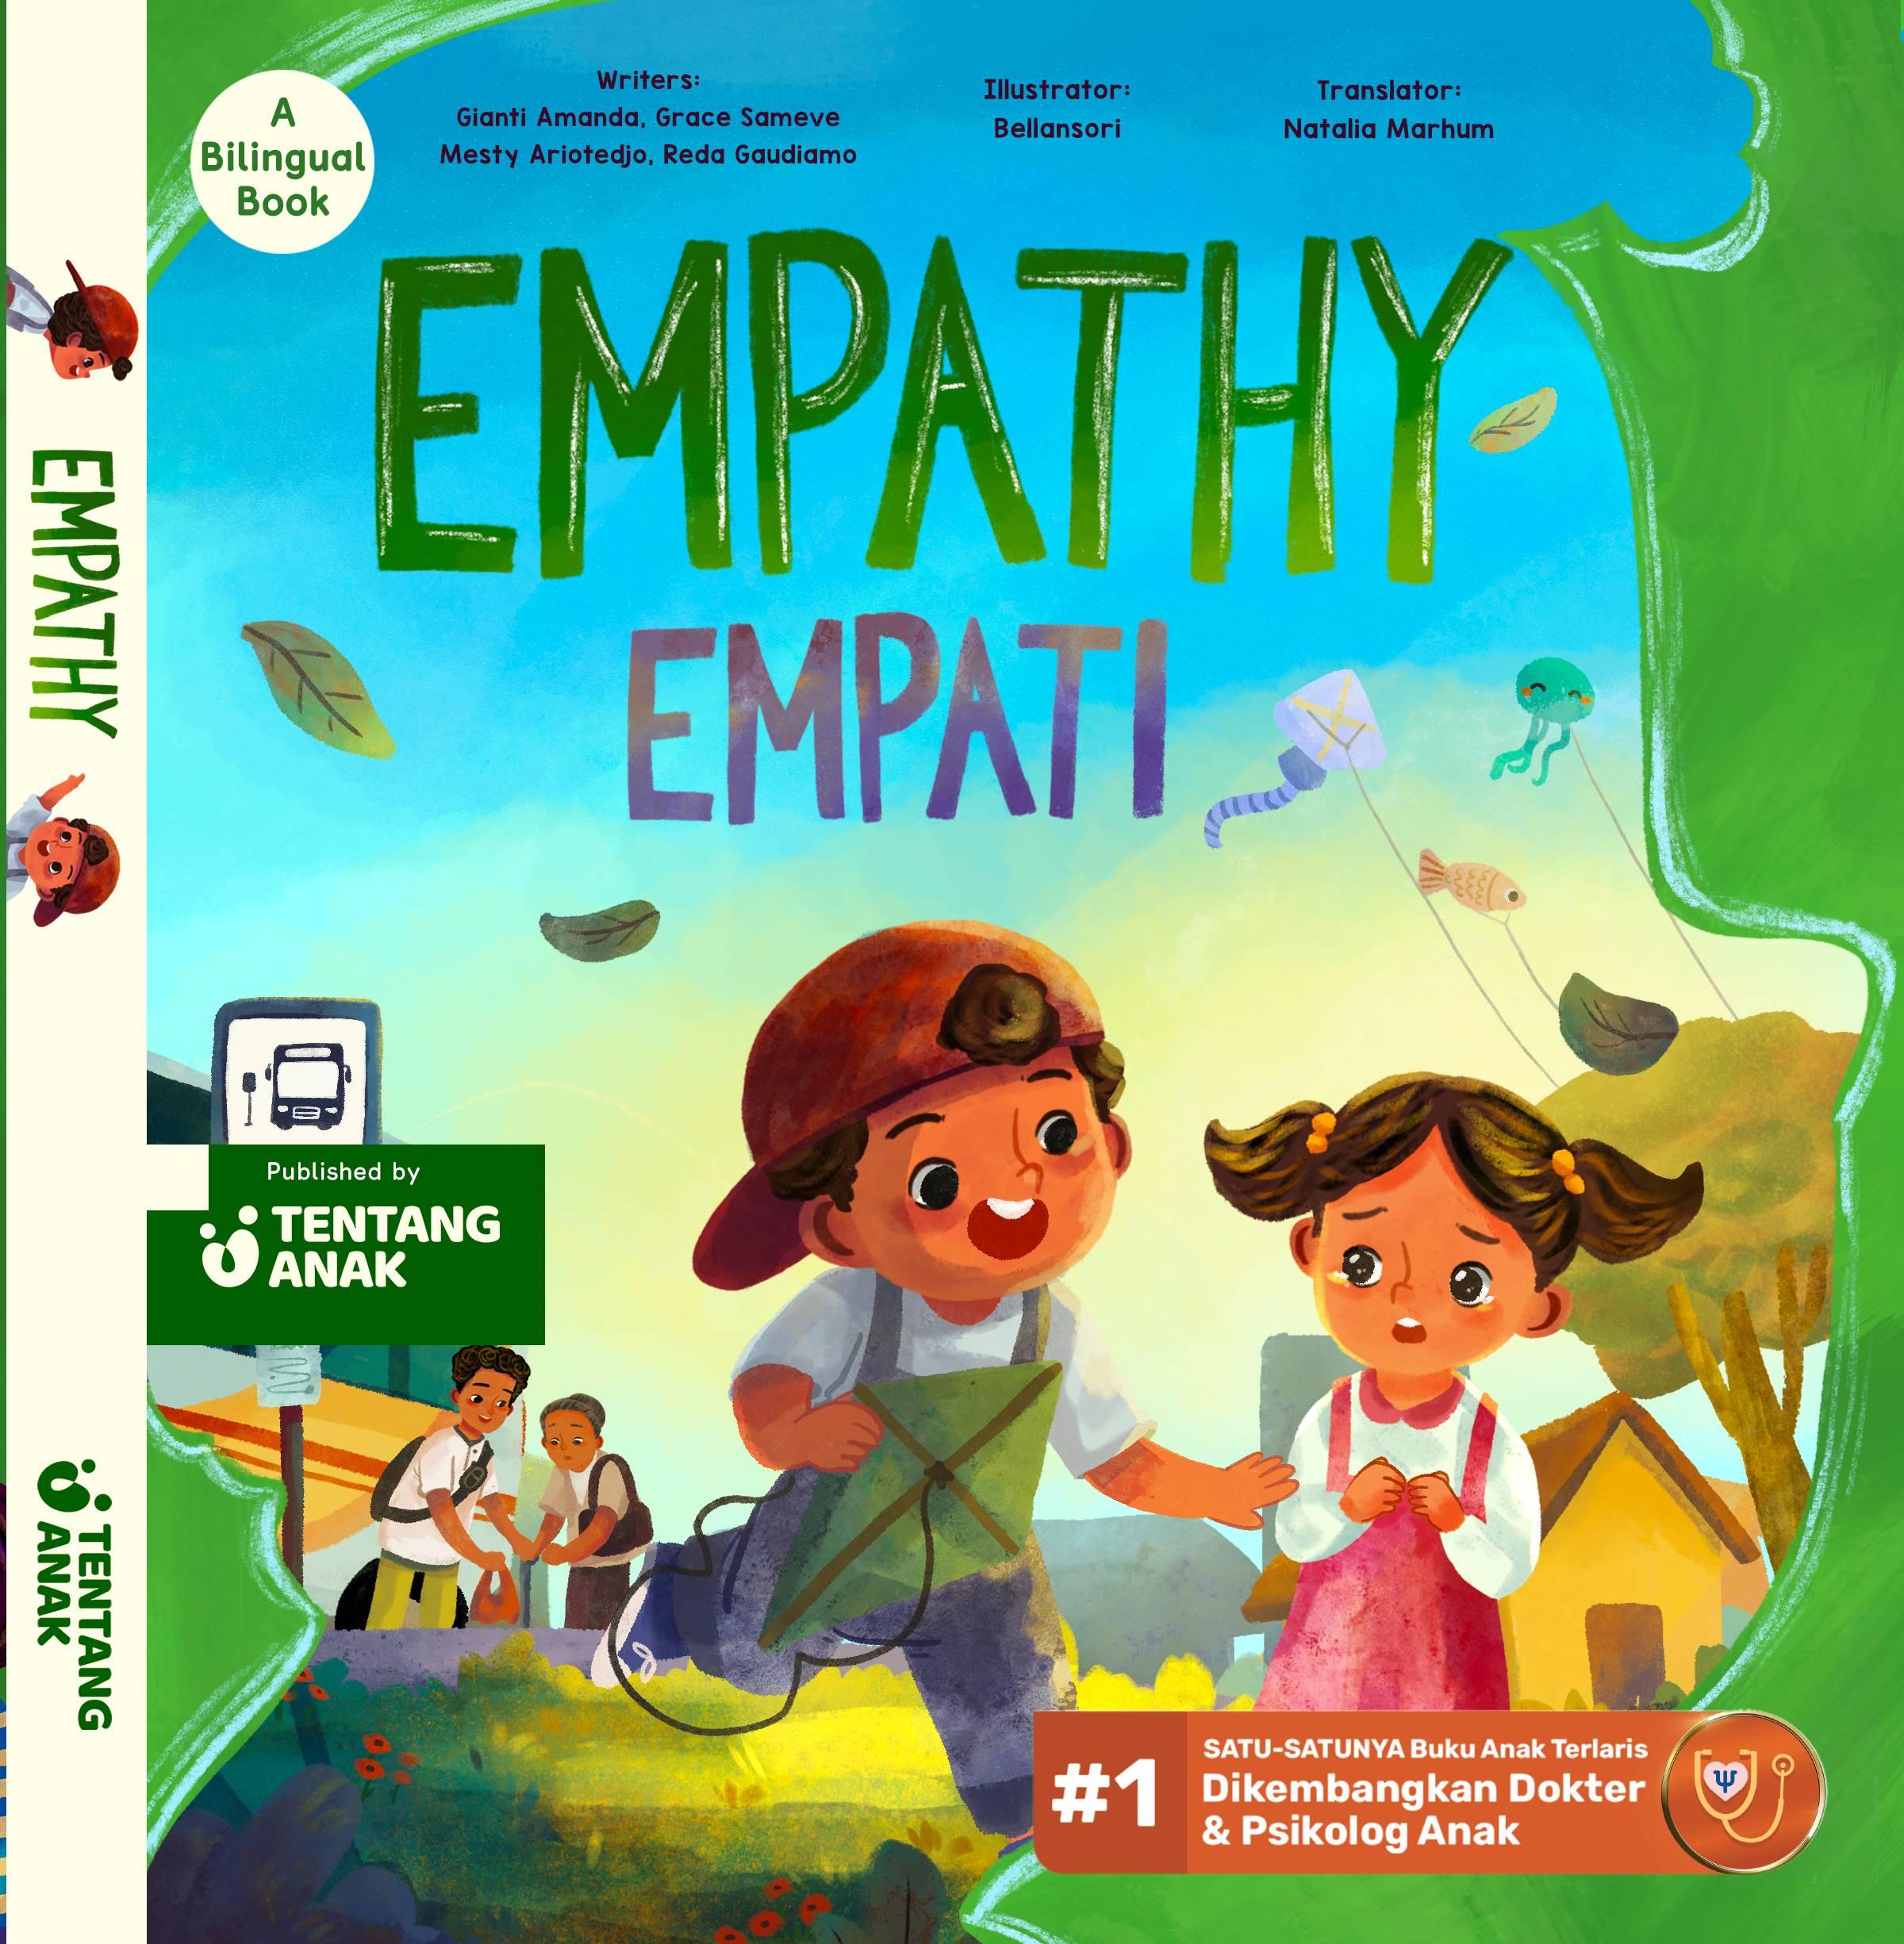 Empathy/Empati (buku bilingual)